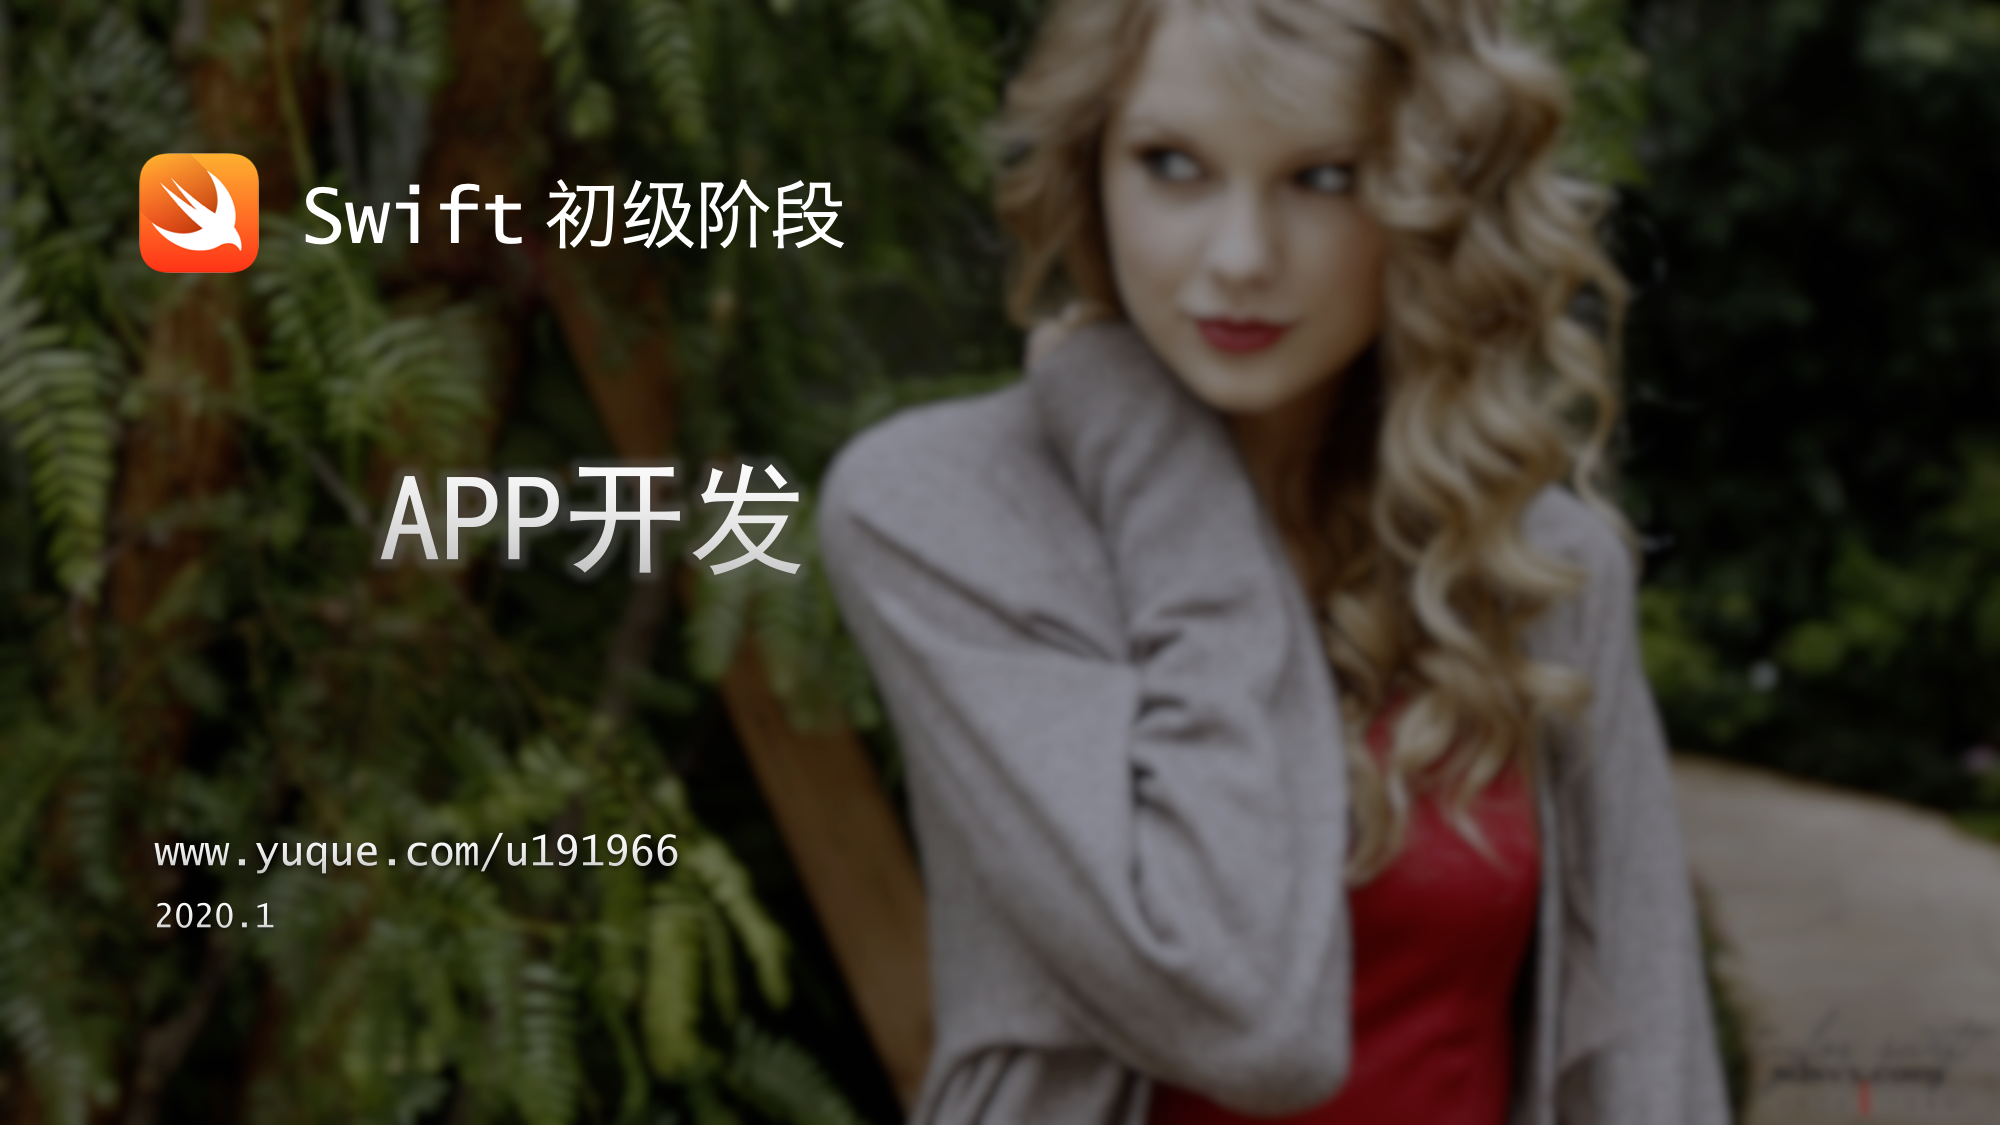 16. Swift App开发.png